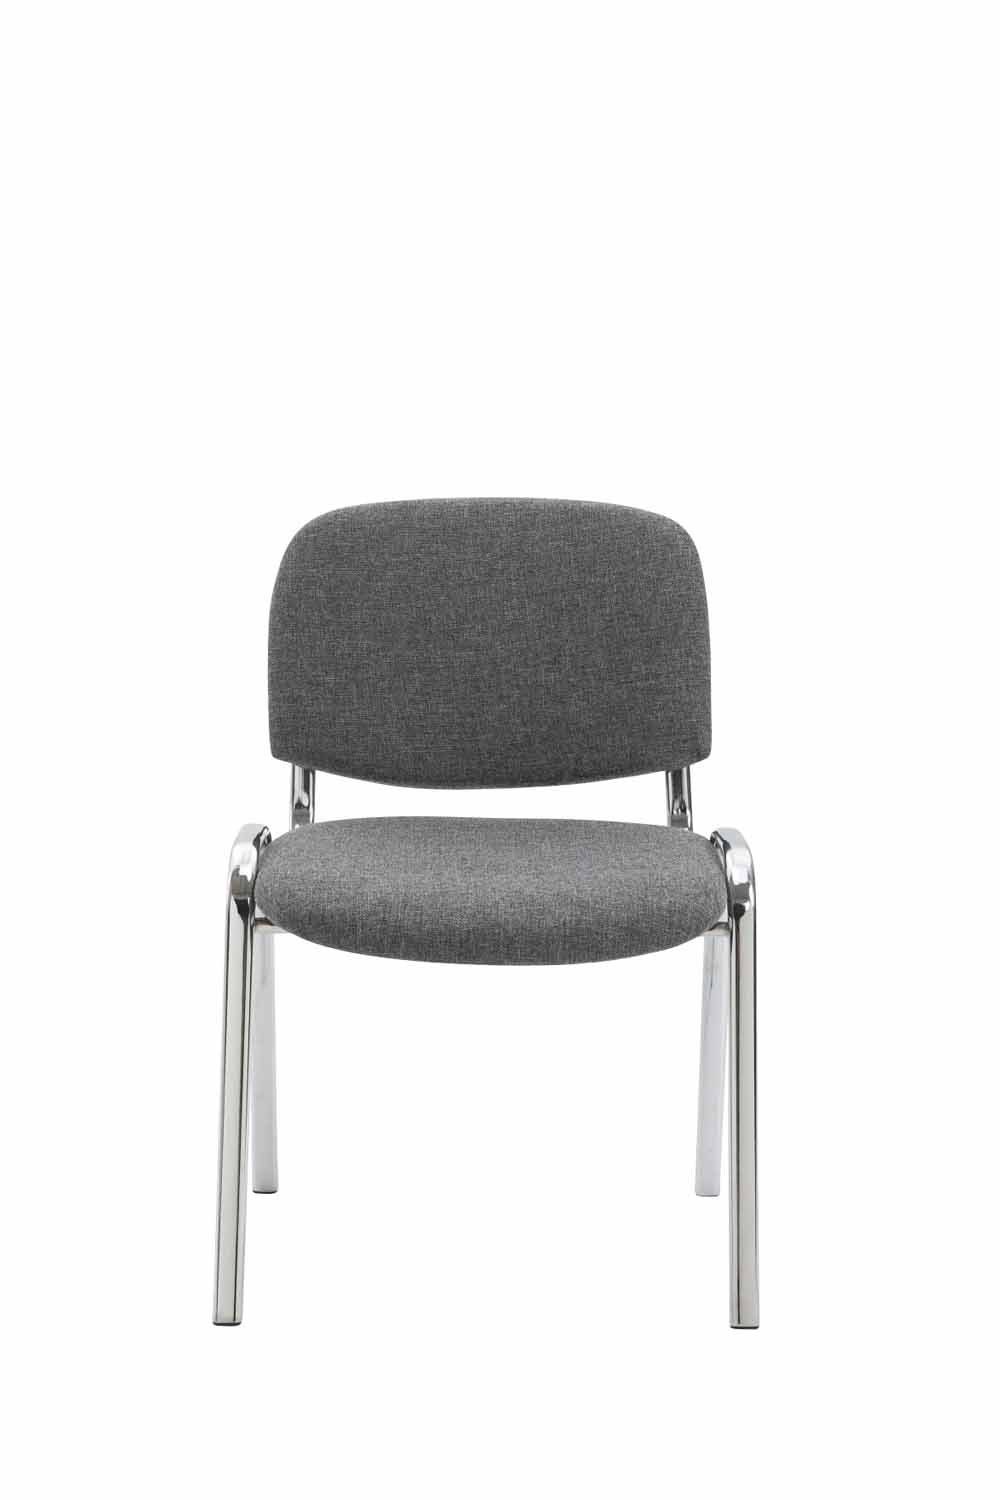 mit - Warteraumstuhl - Keen TPFLiving grau - Metall Sitzfläche: chrom Polsterung Gestell: Besucherstuhl hochwertiger - Messestuhl), Stoff (Besprechungsstuhl Konferenzstuhl